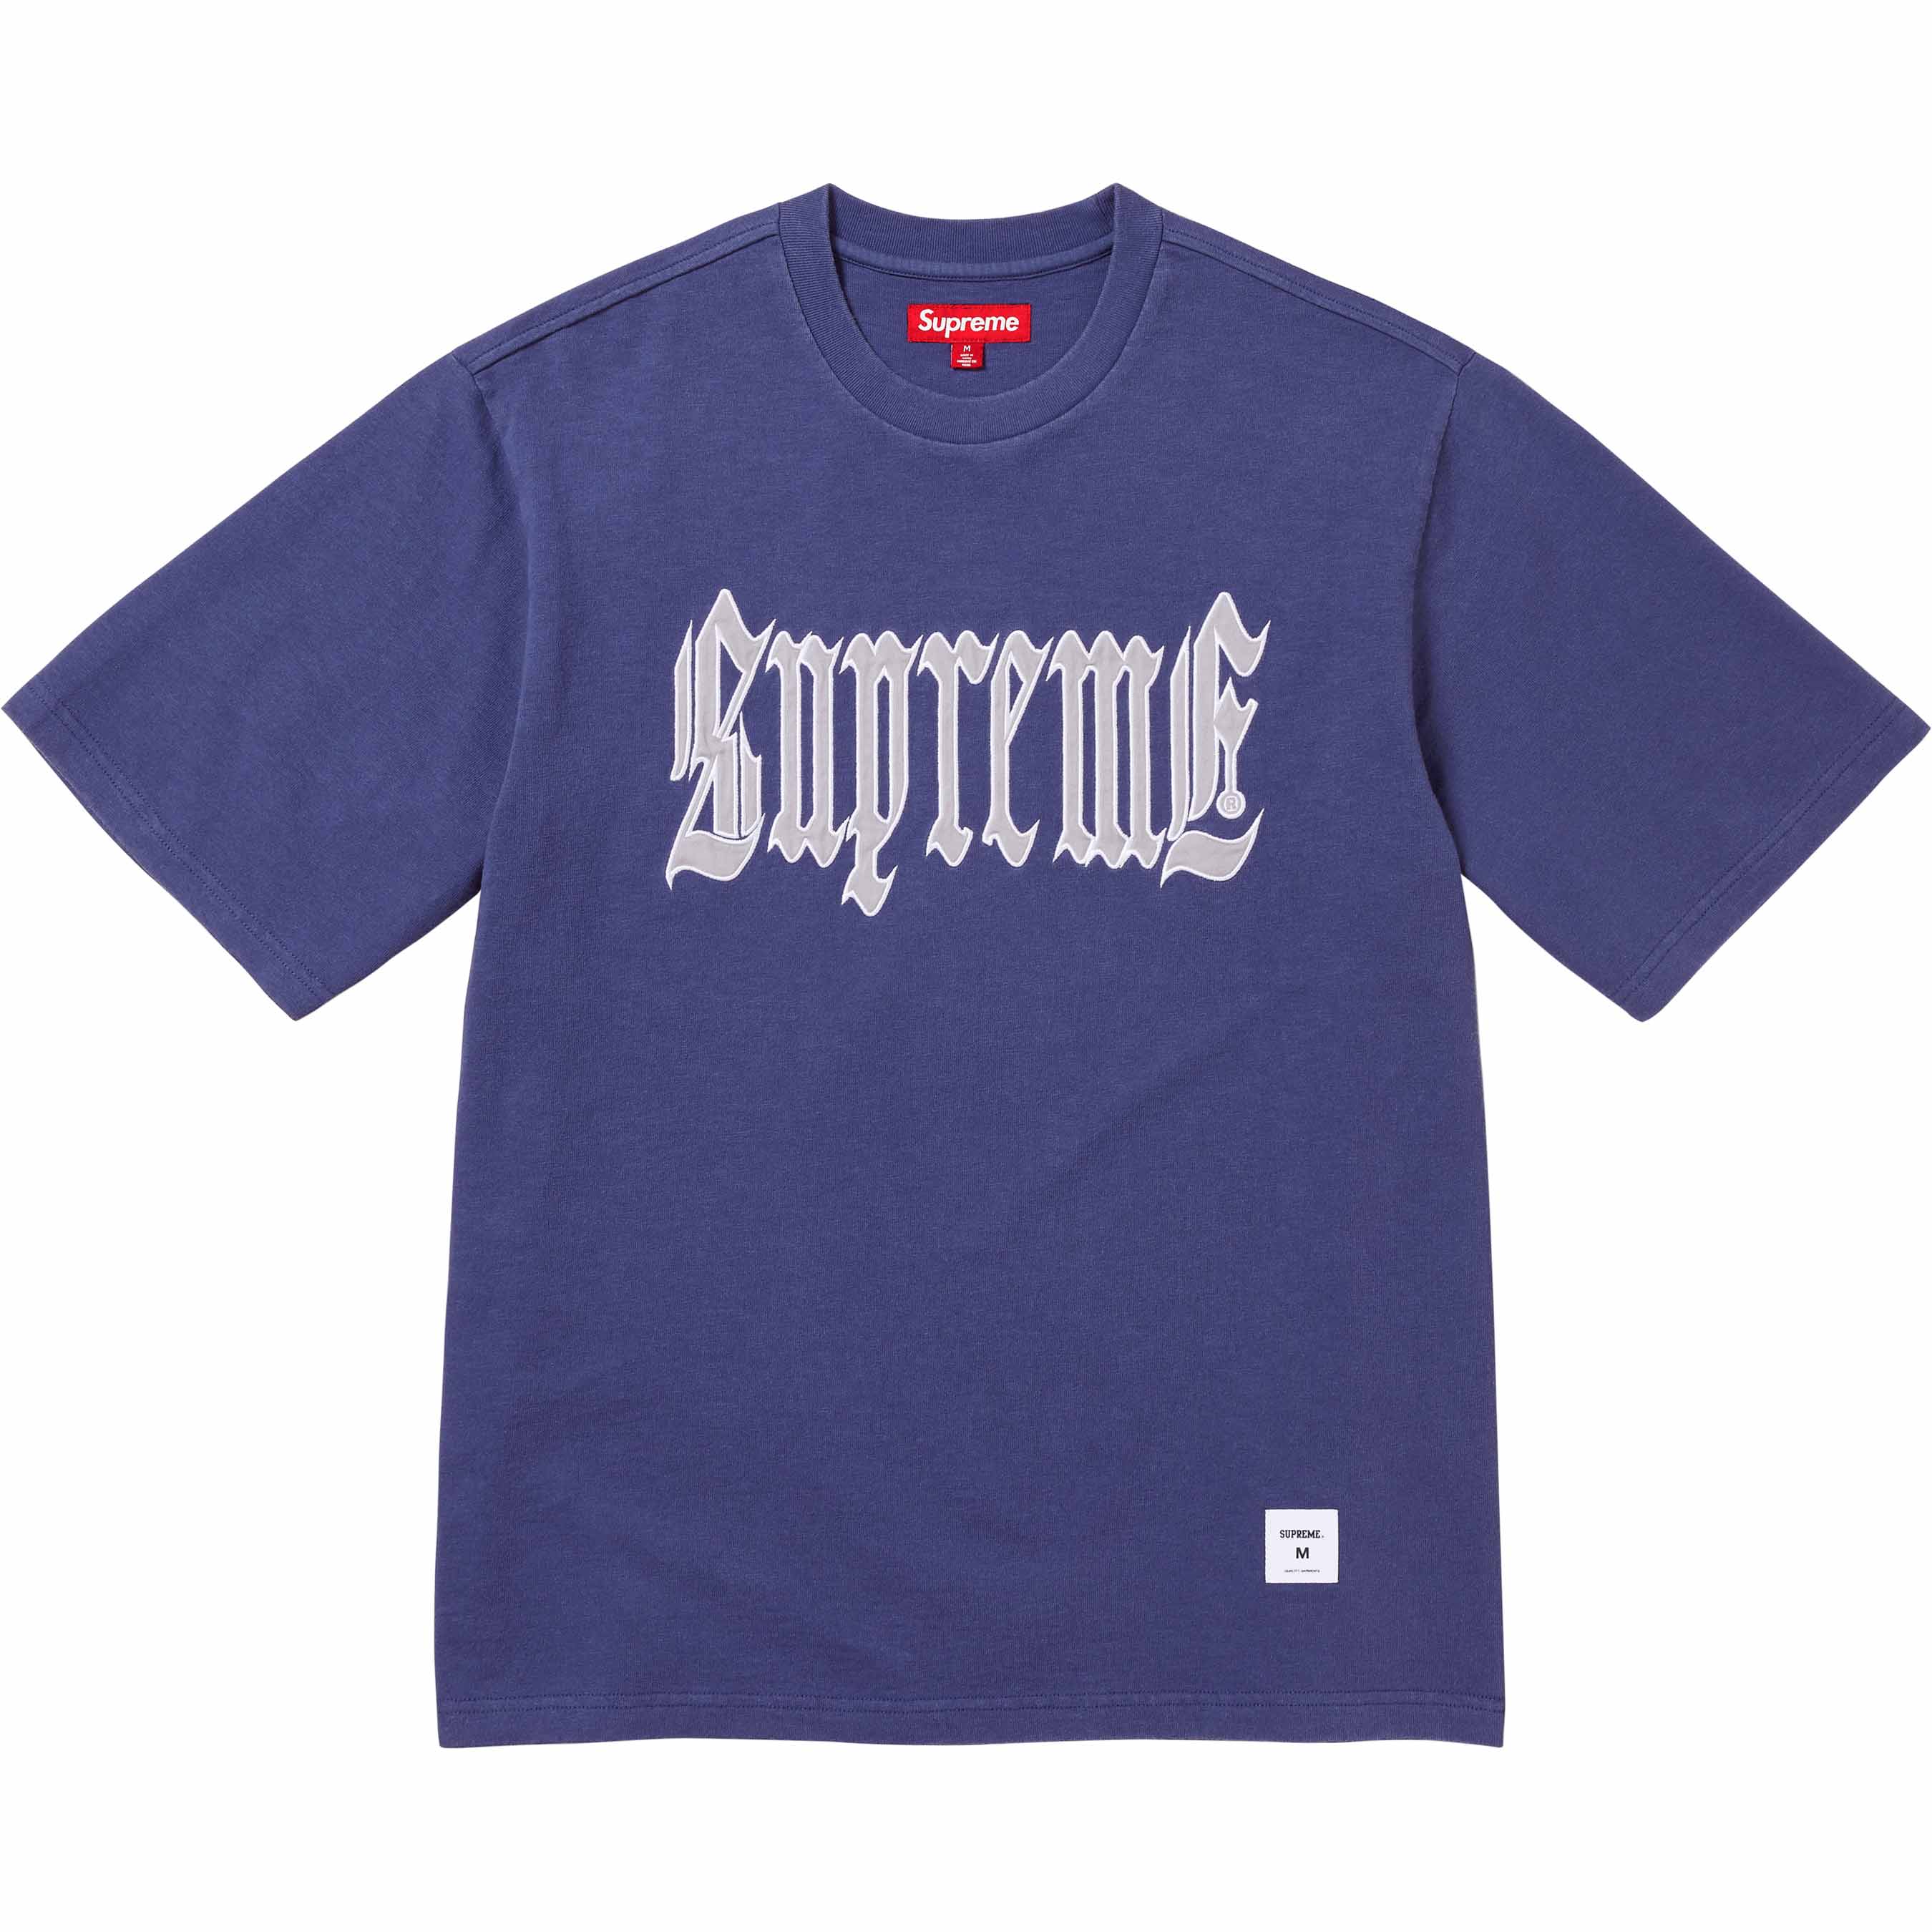 Old English S/S Top - Shop - Supreme